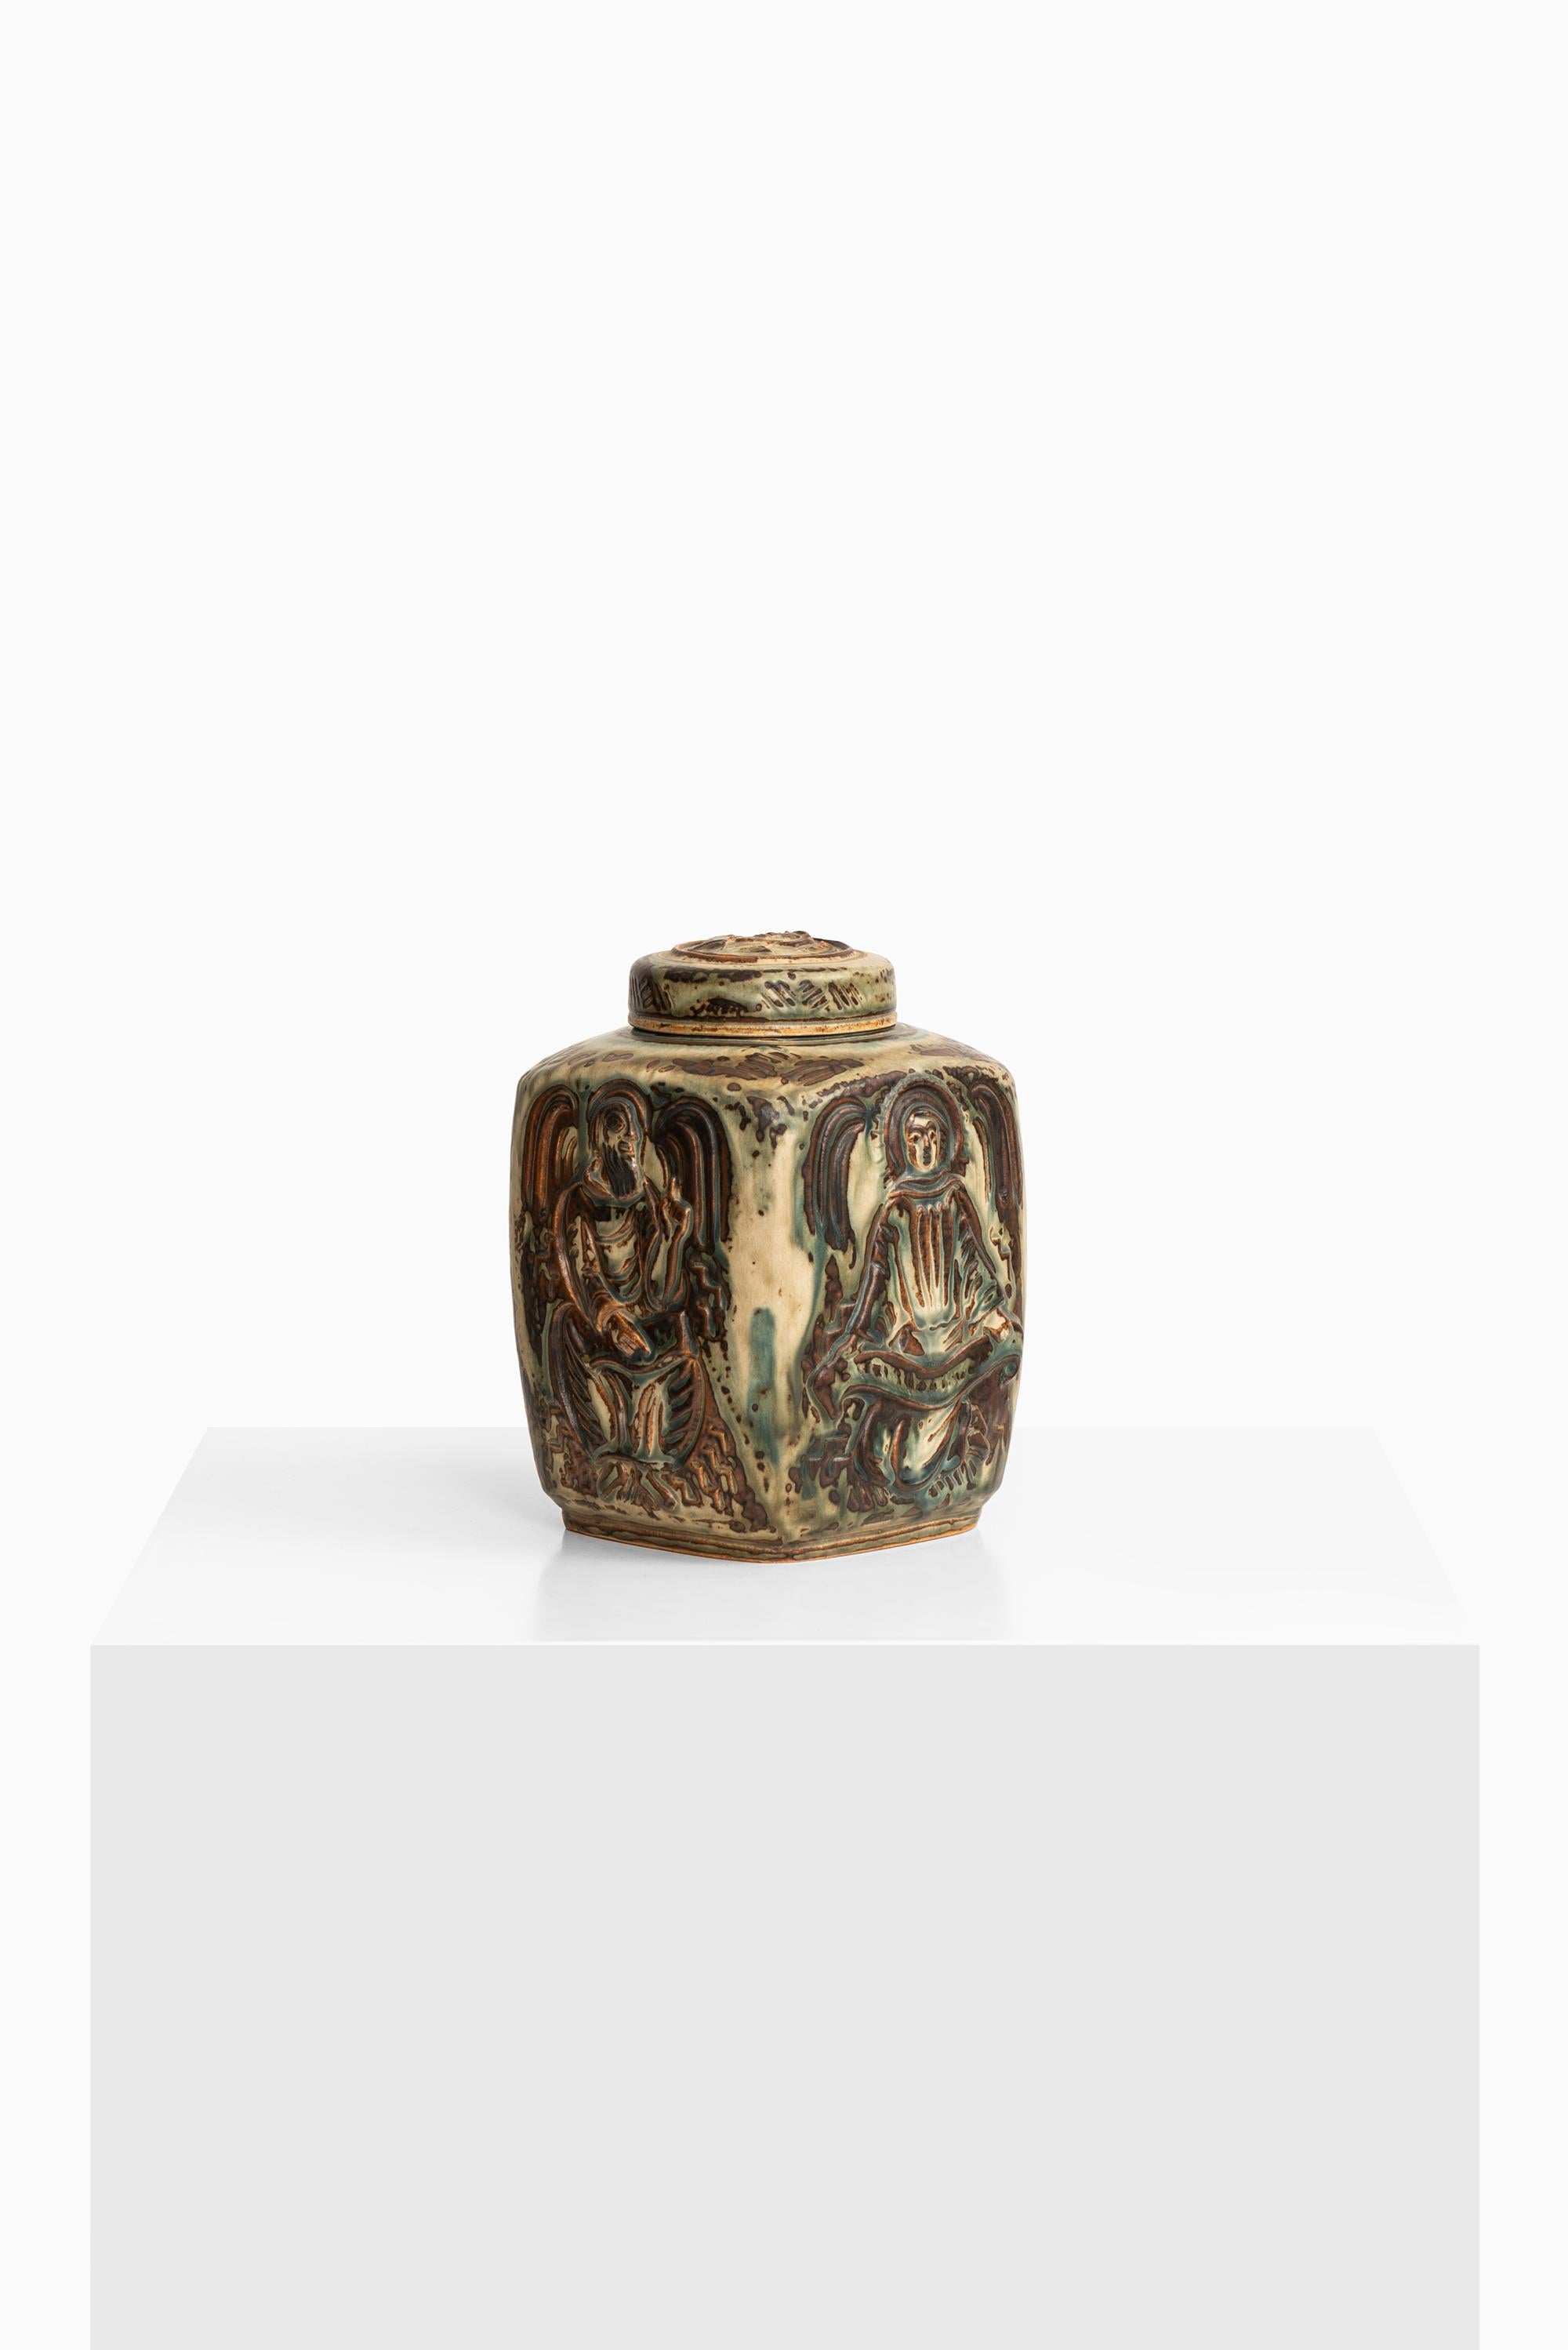 Ceramic vase / urn with lid designed by Jais Nielsen. Produced by Royal Copenhagen in Denmark.